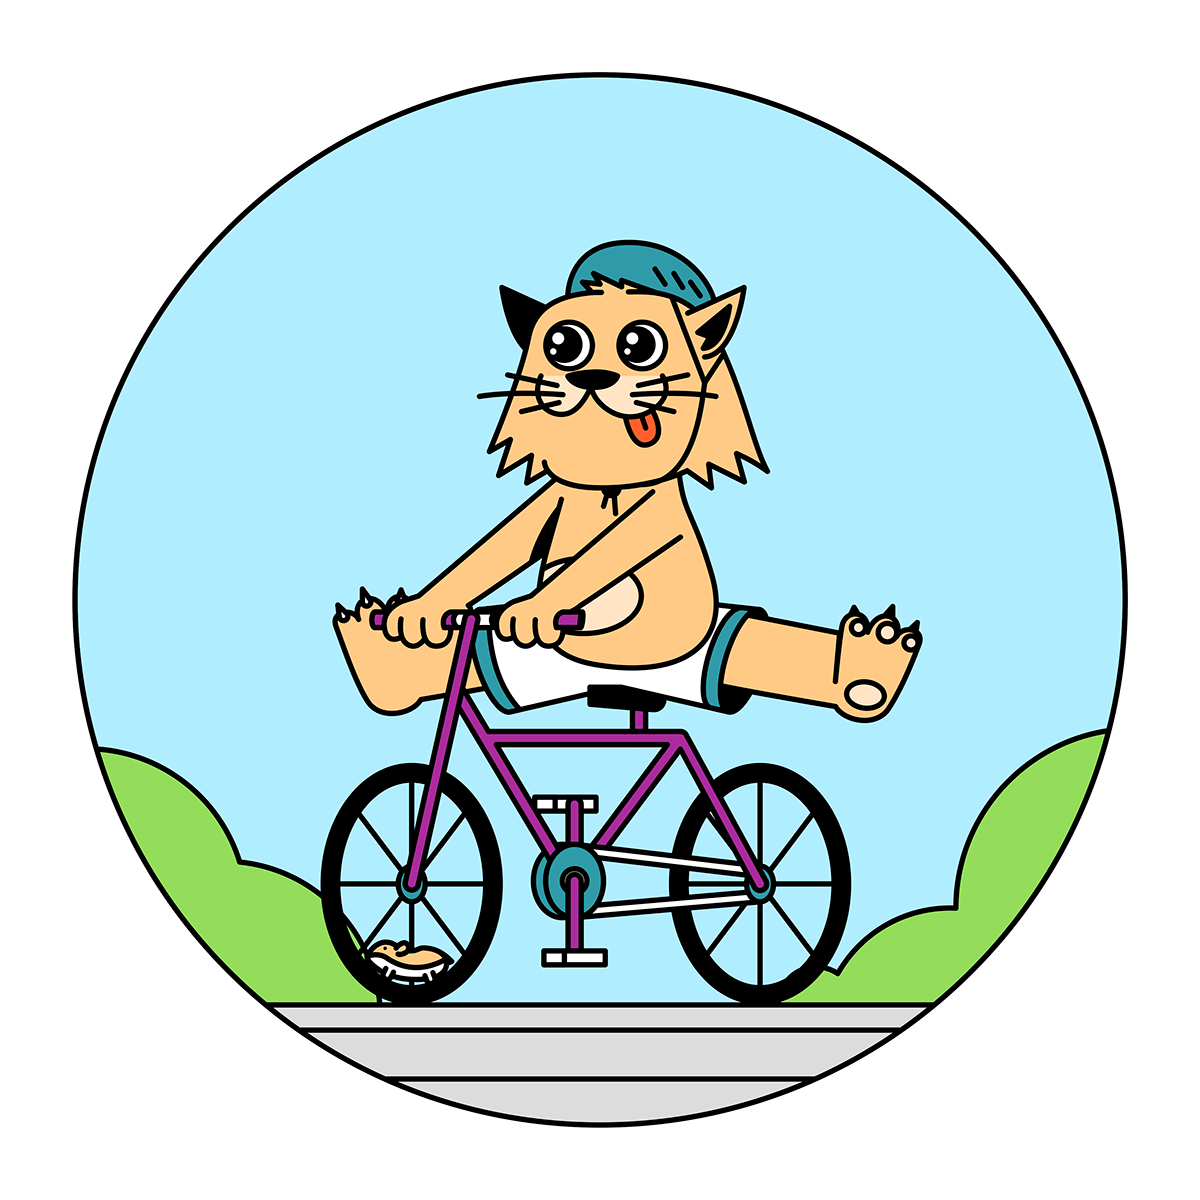 Image may contain: cartoon and bicycle